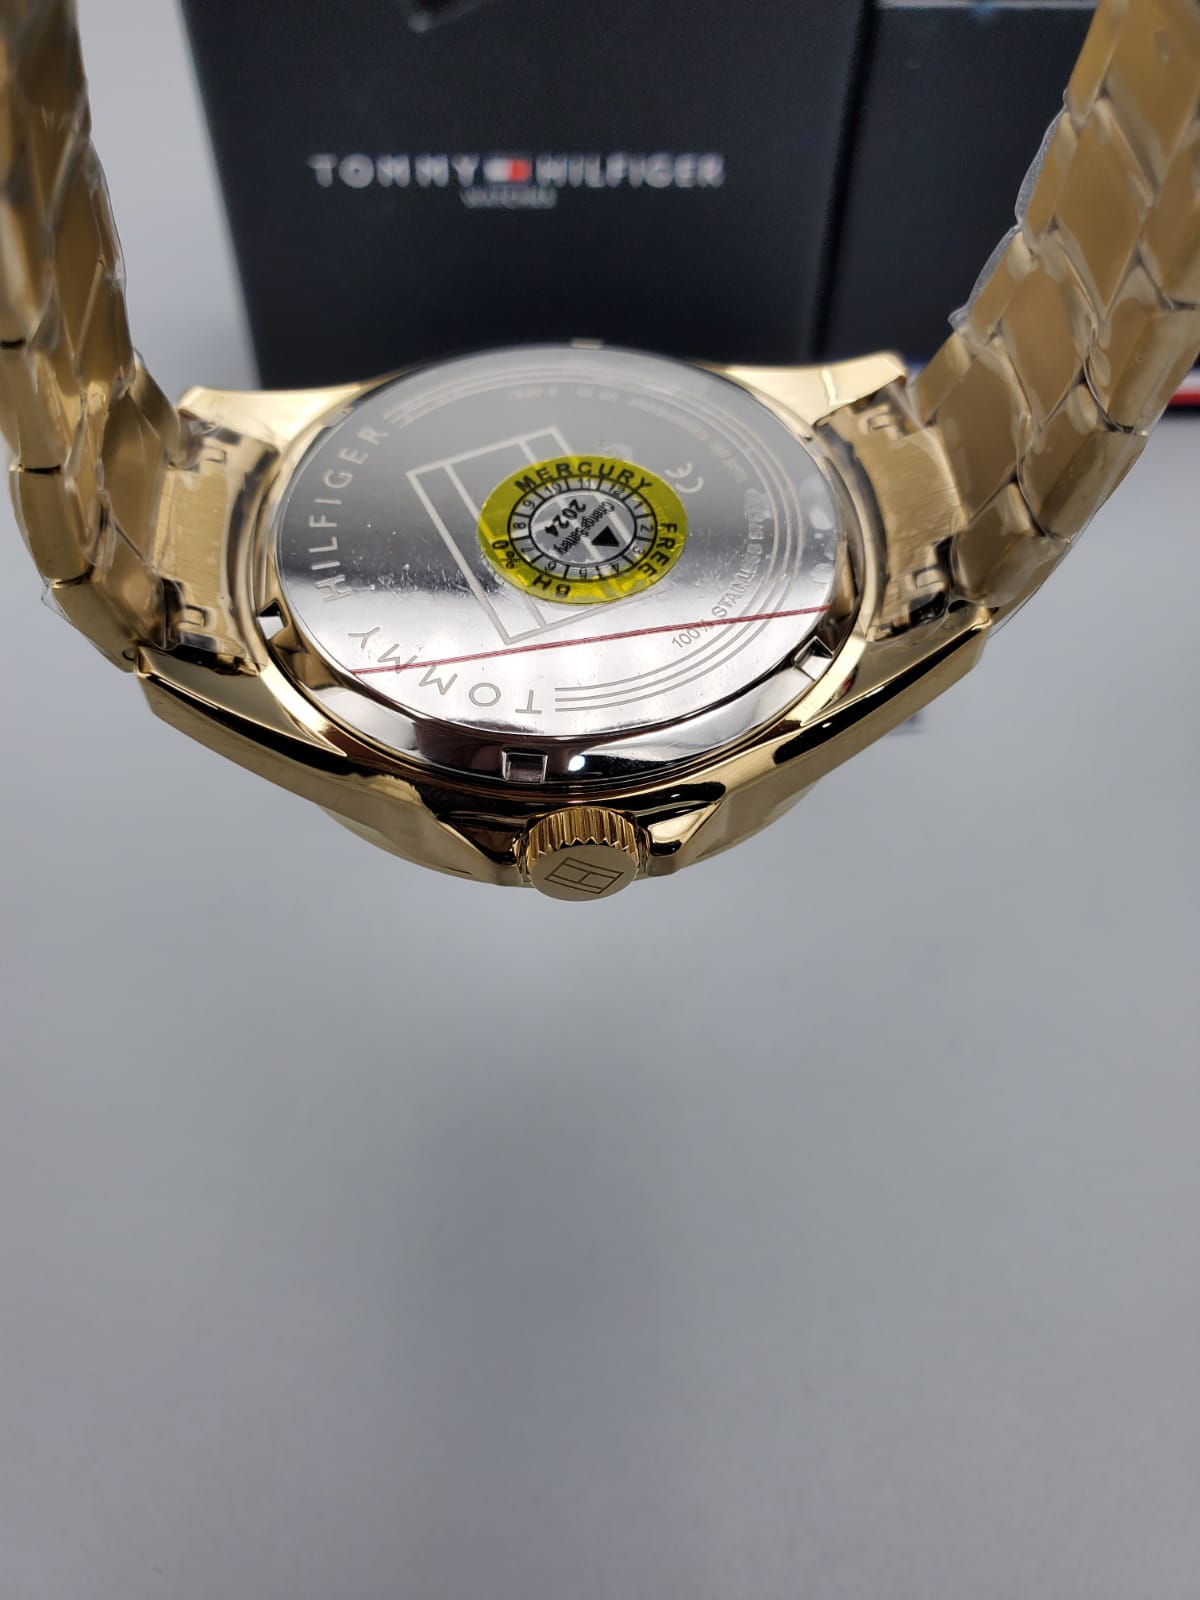 Tommy Hilfiger Men's Quartz Watch with Gold-Tone-S